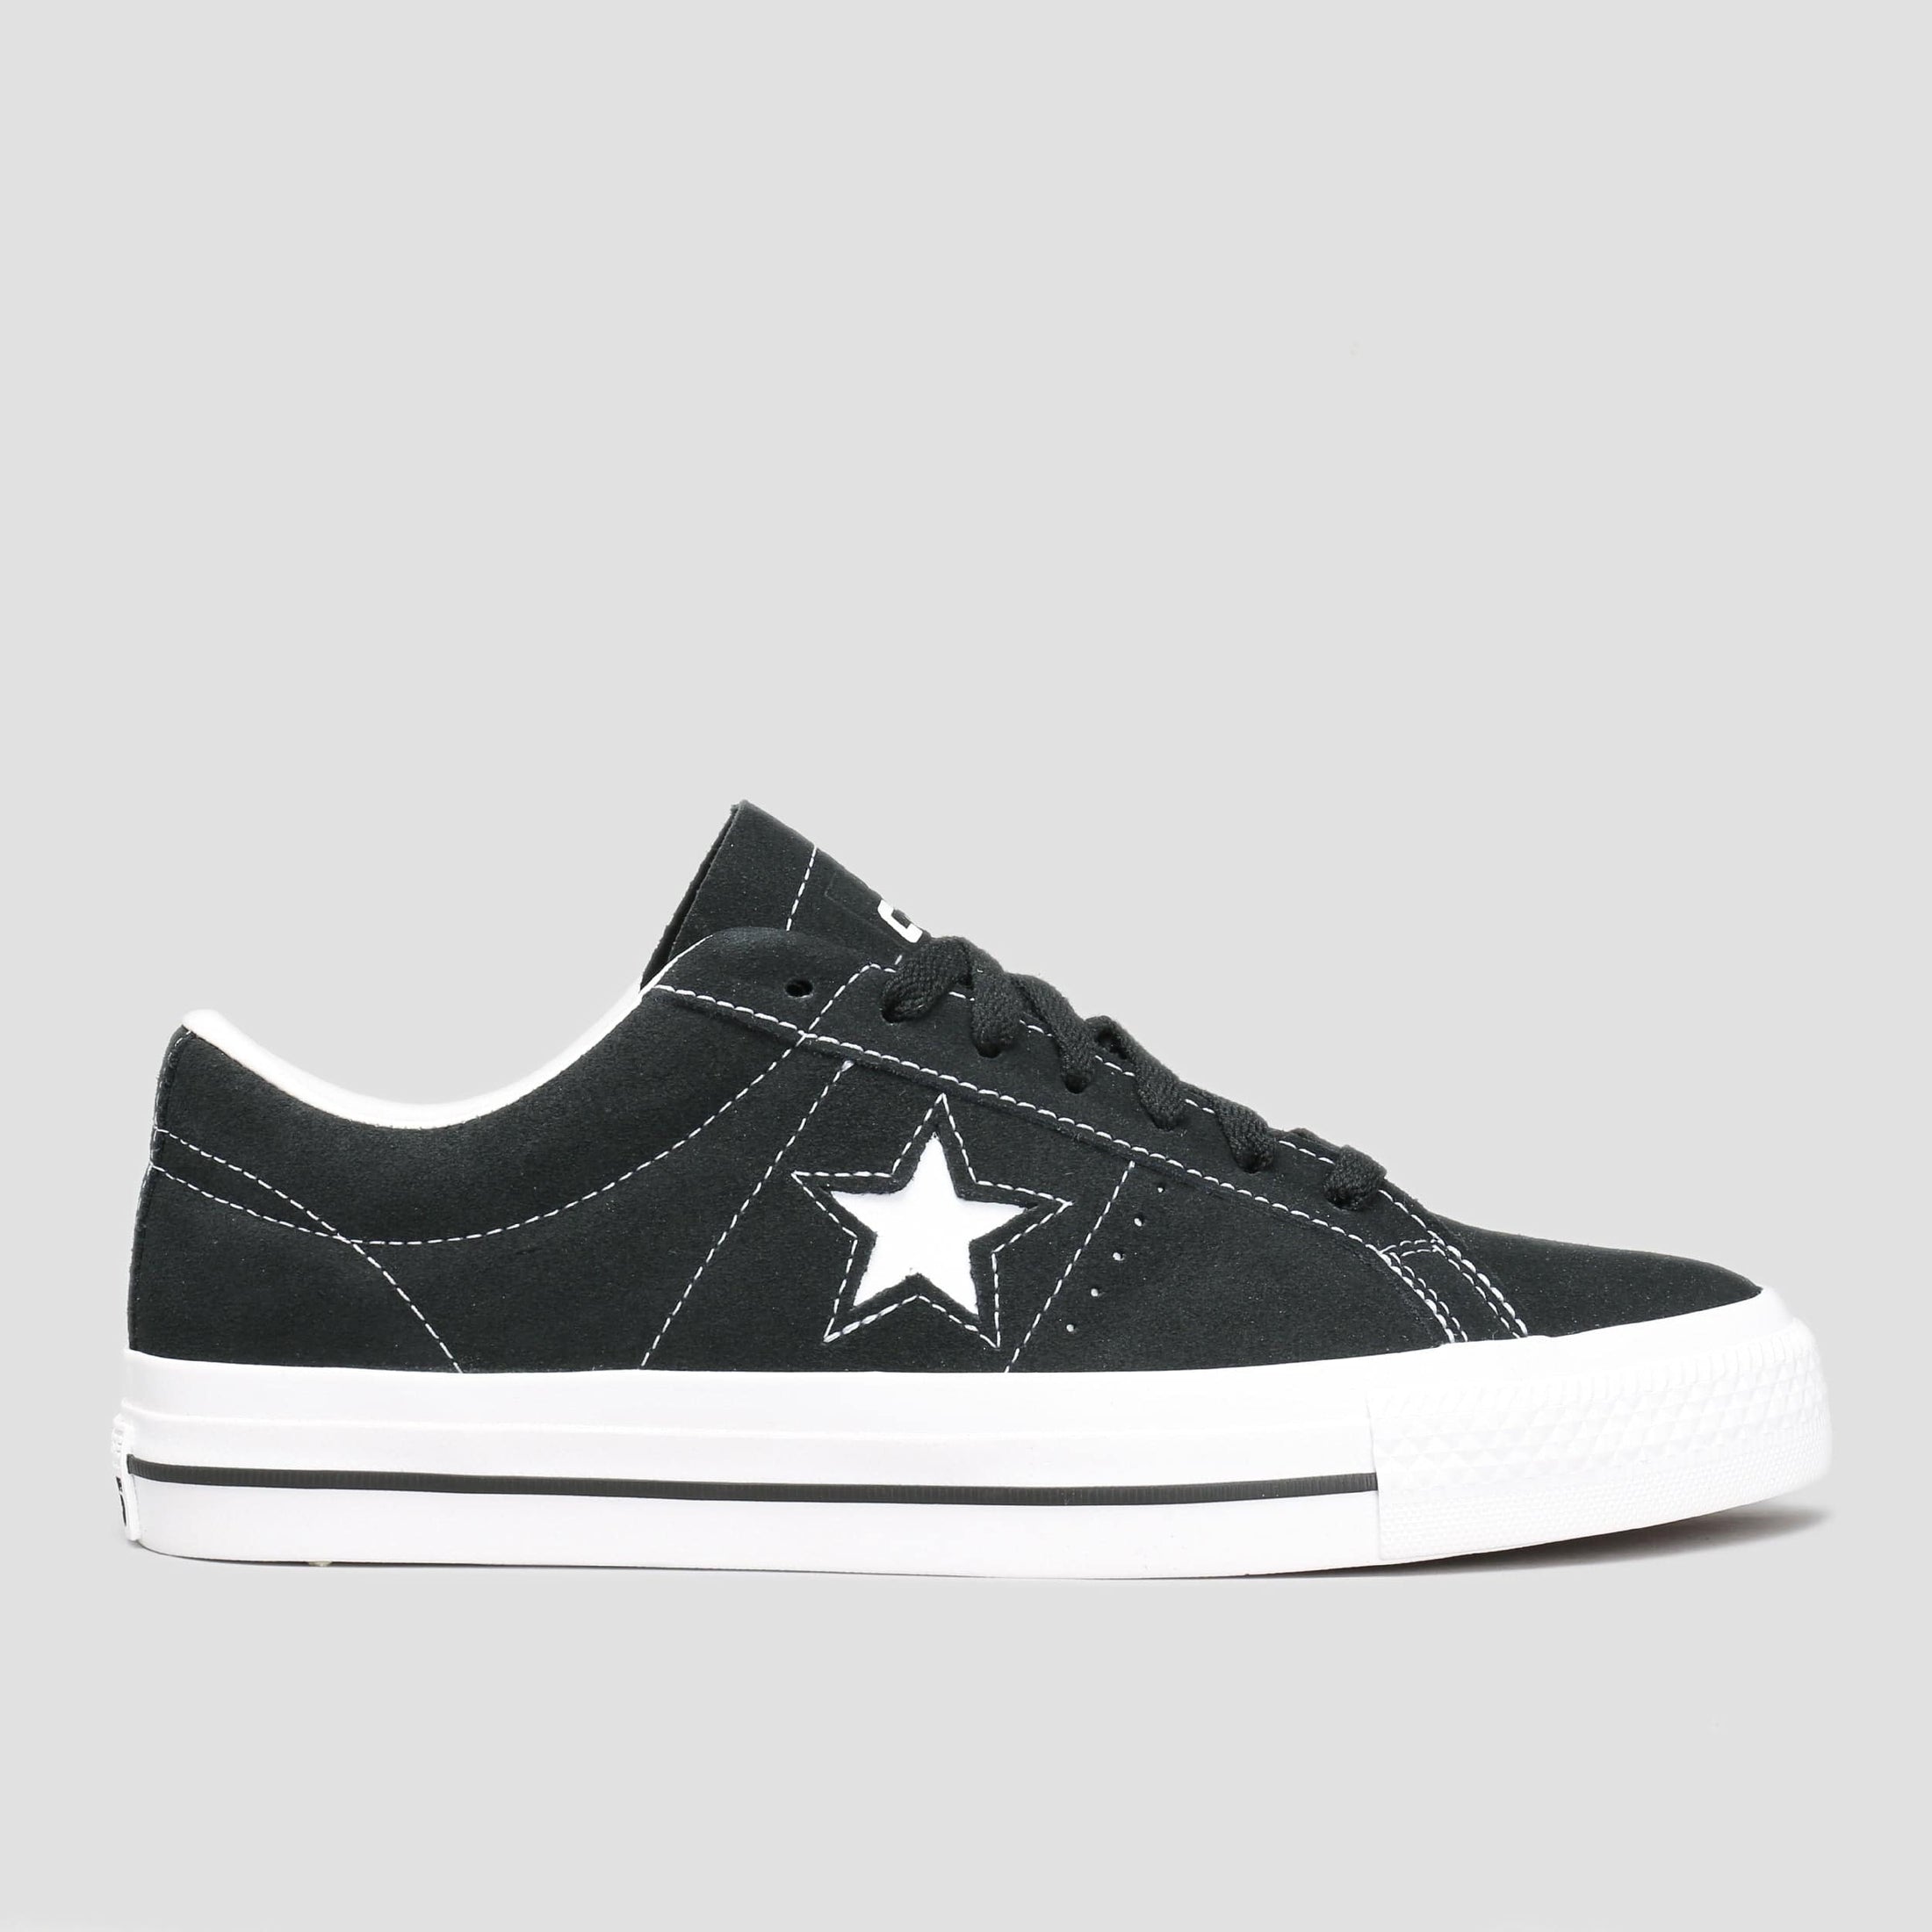 Converse One Star Pro OX Shoes Black / Black / White